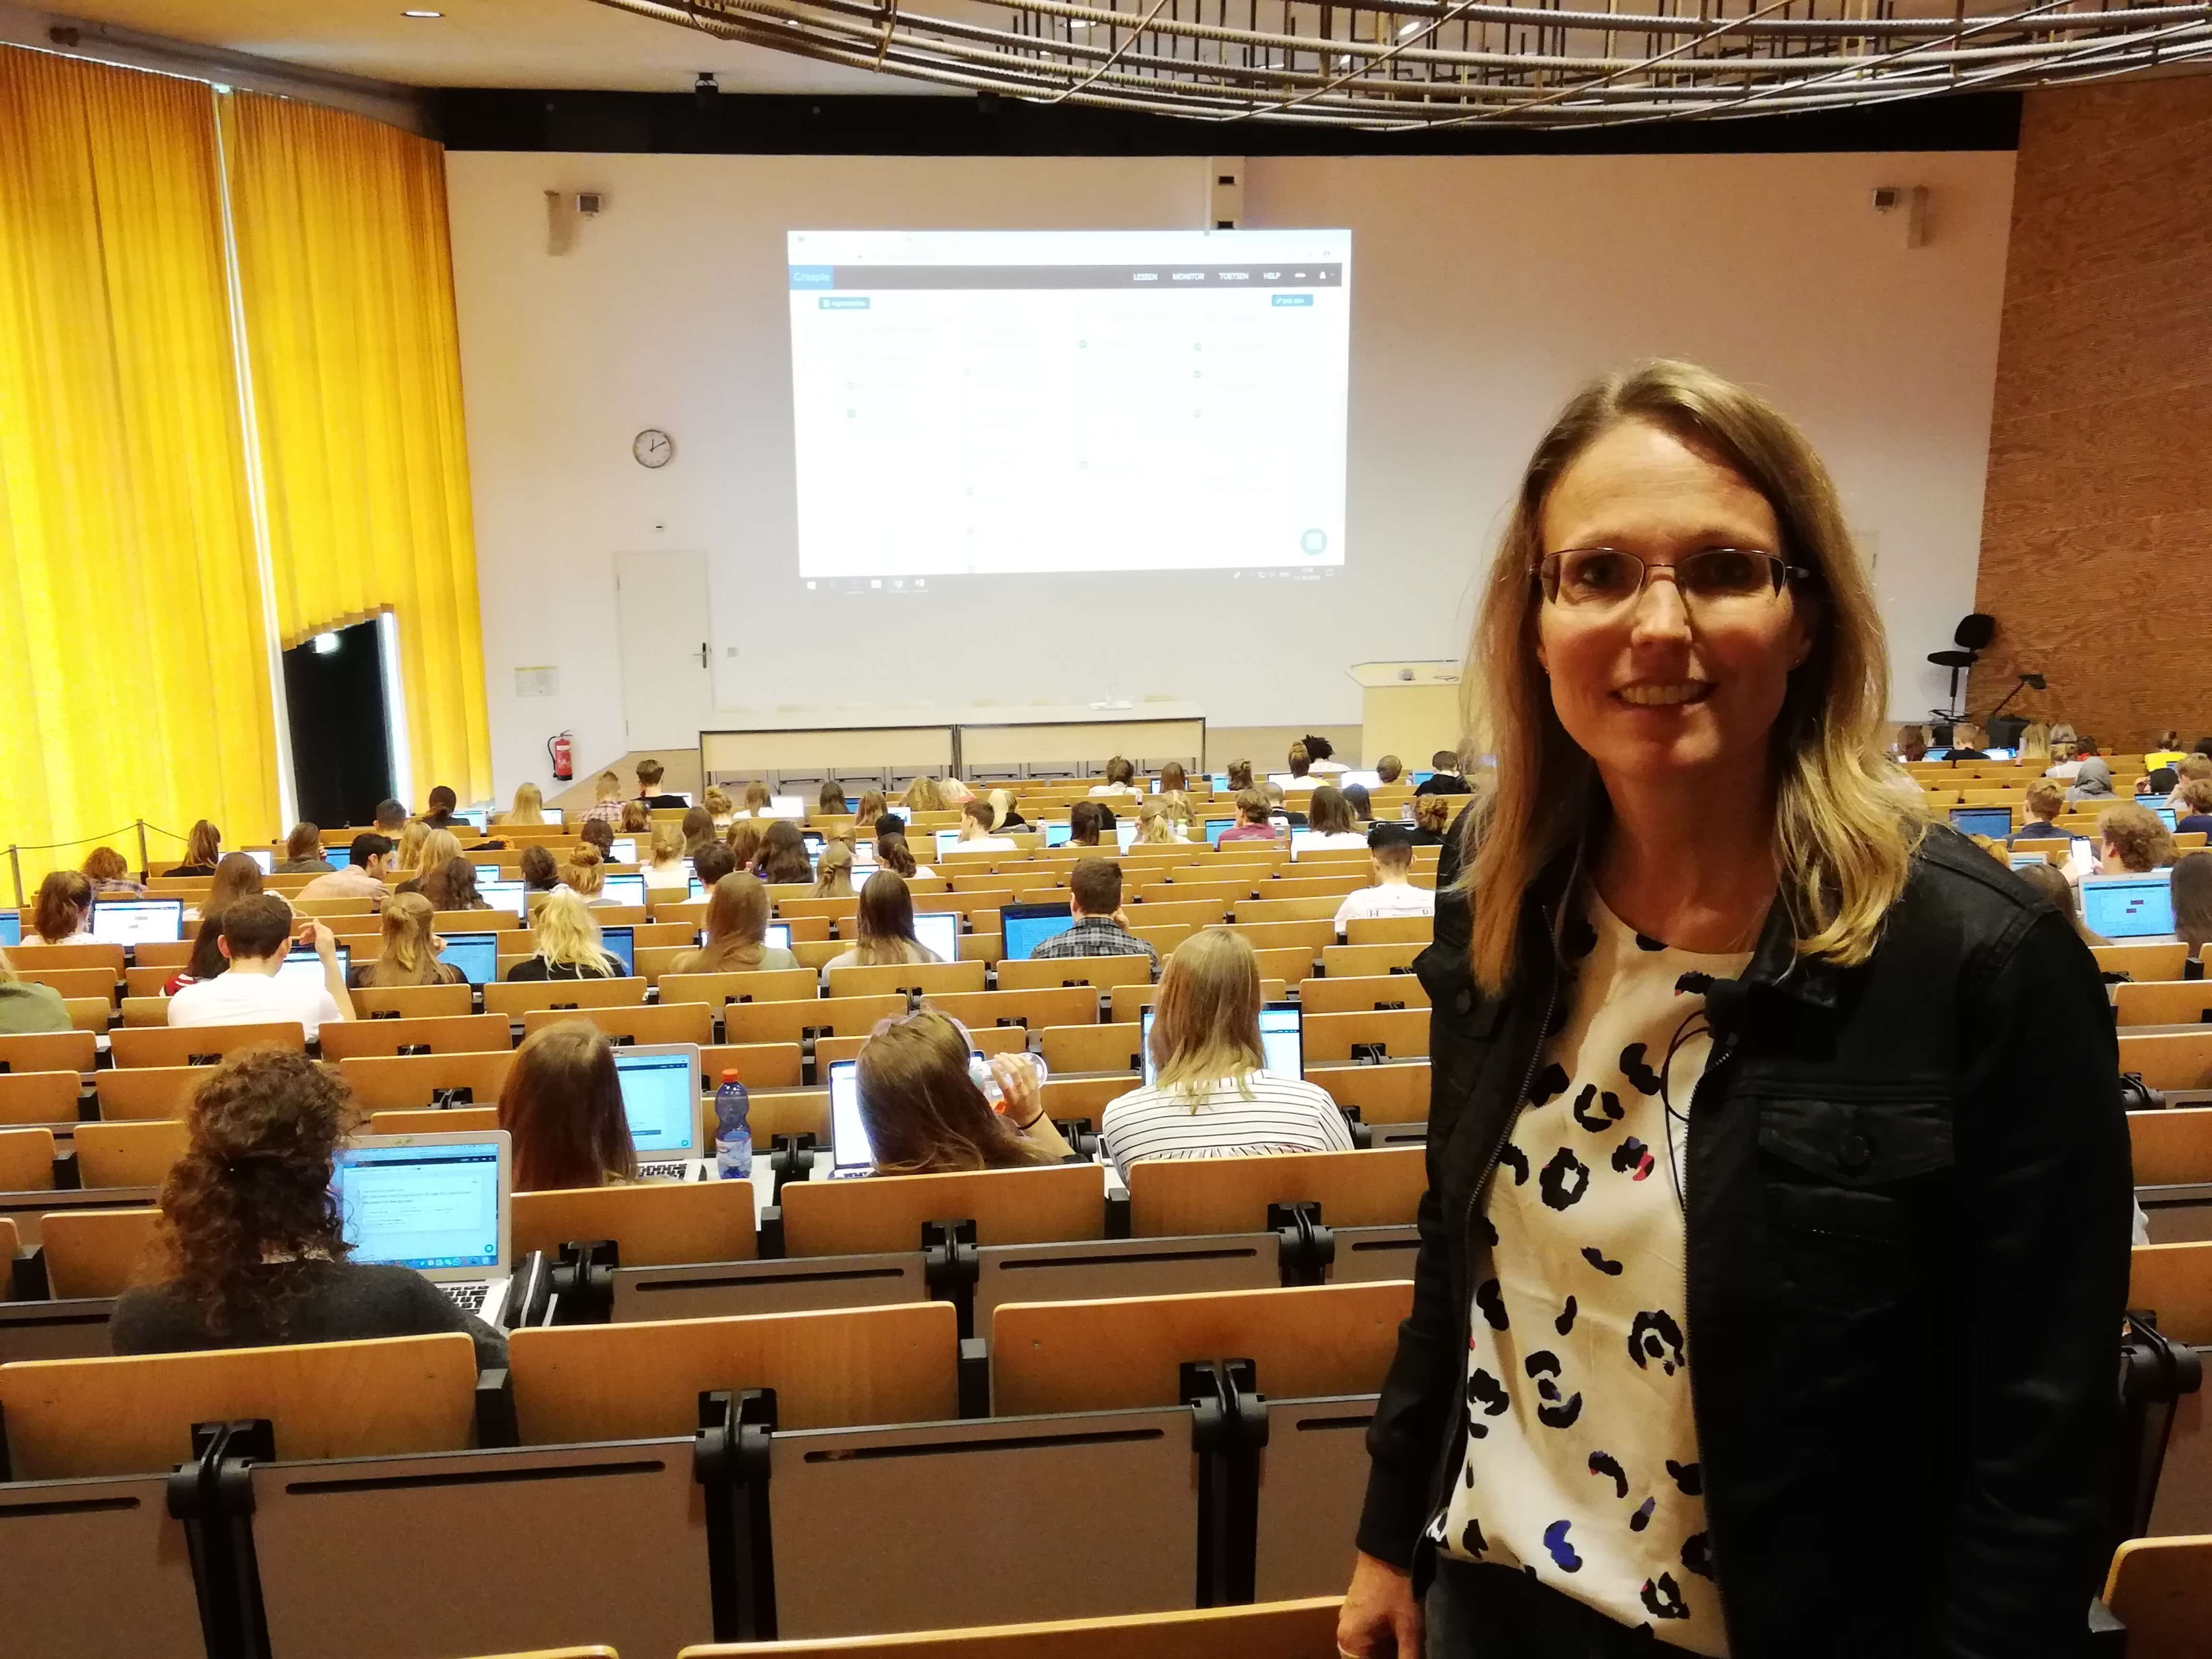 A teacher from the University of Utrecht standing in front of her class